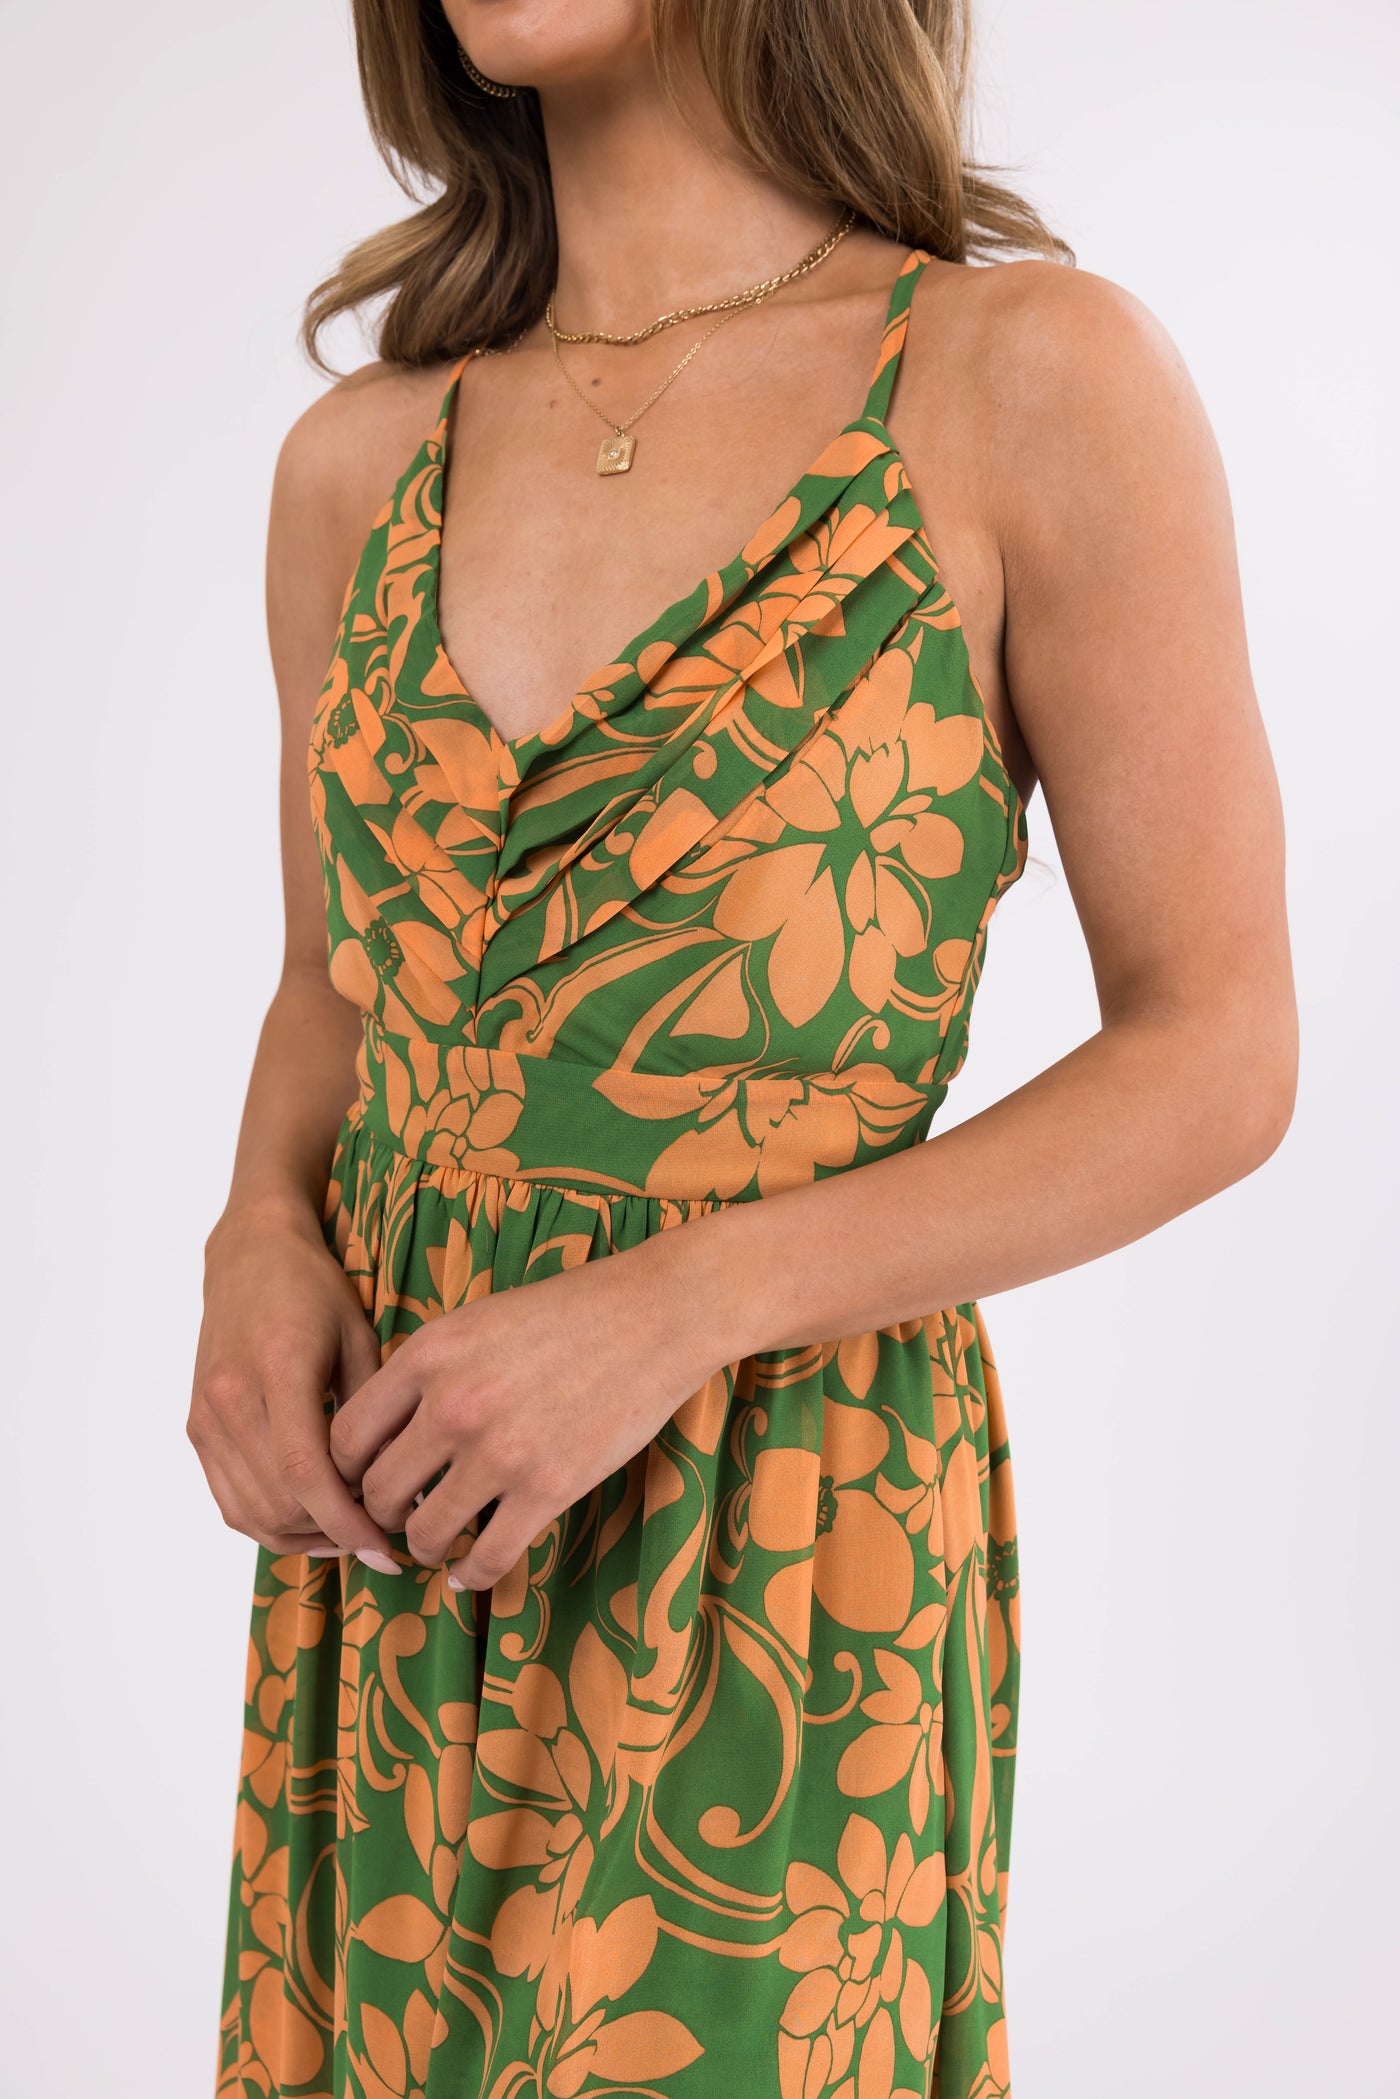 Jade and Melon Floral Print Maxi Dress